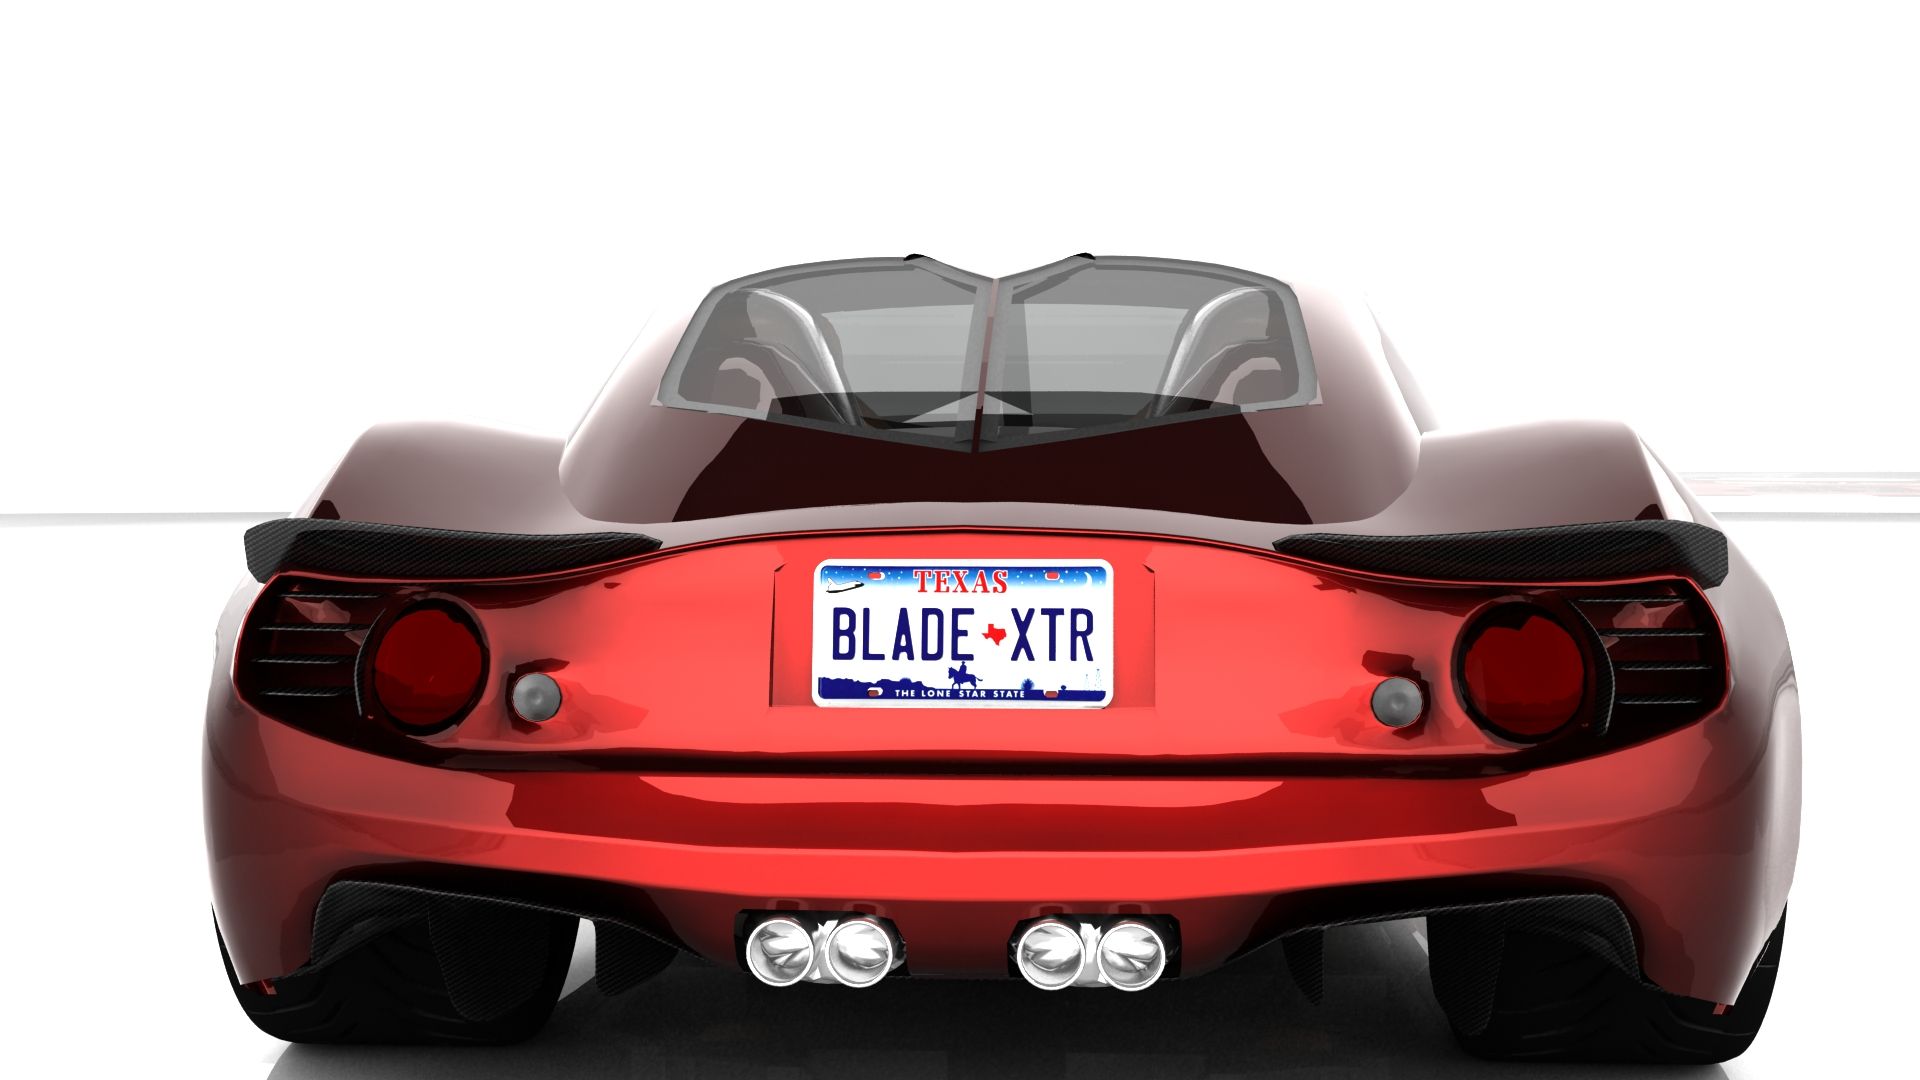 2014 BXR Motors Bailey Blade XTR